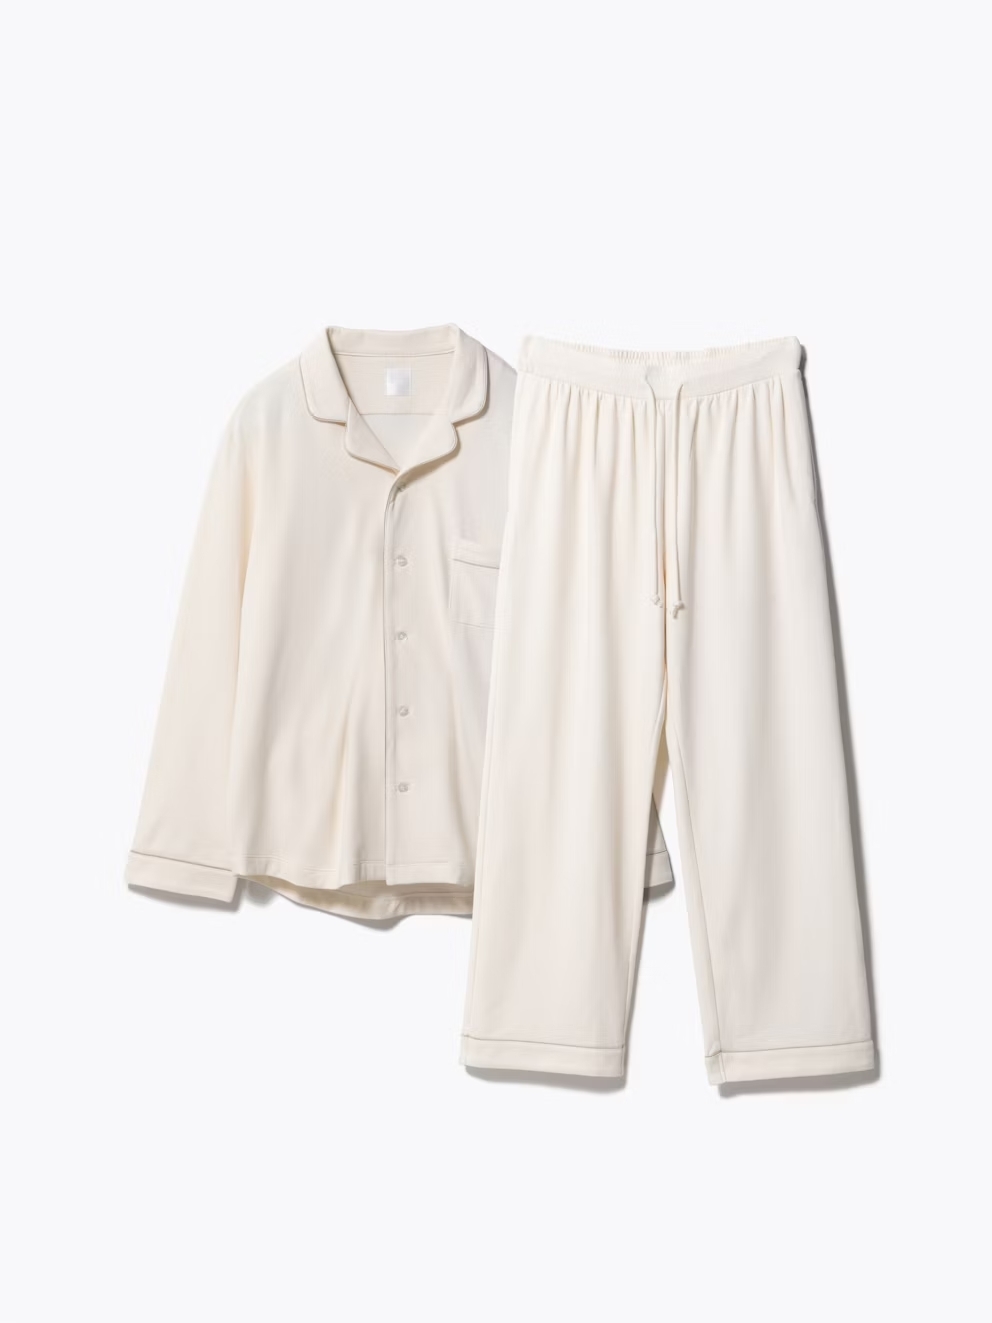 TENTIAL(テンシャル) BAKUNE Pajamas Premium